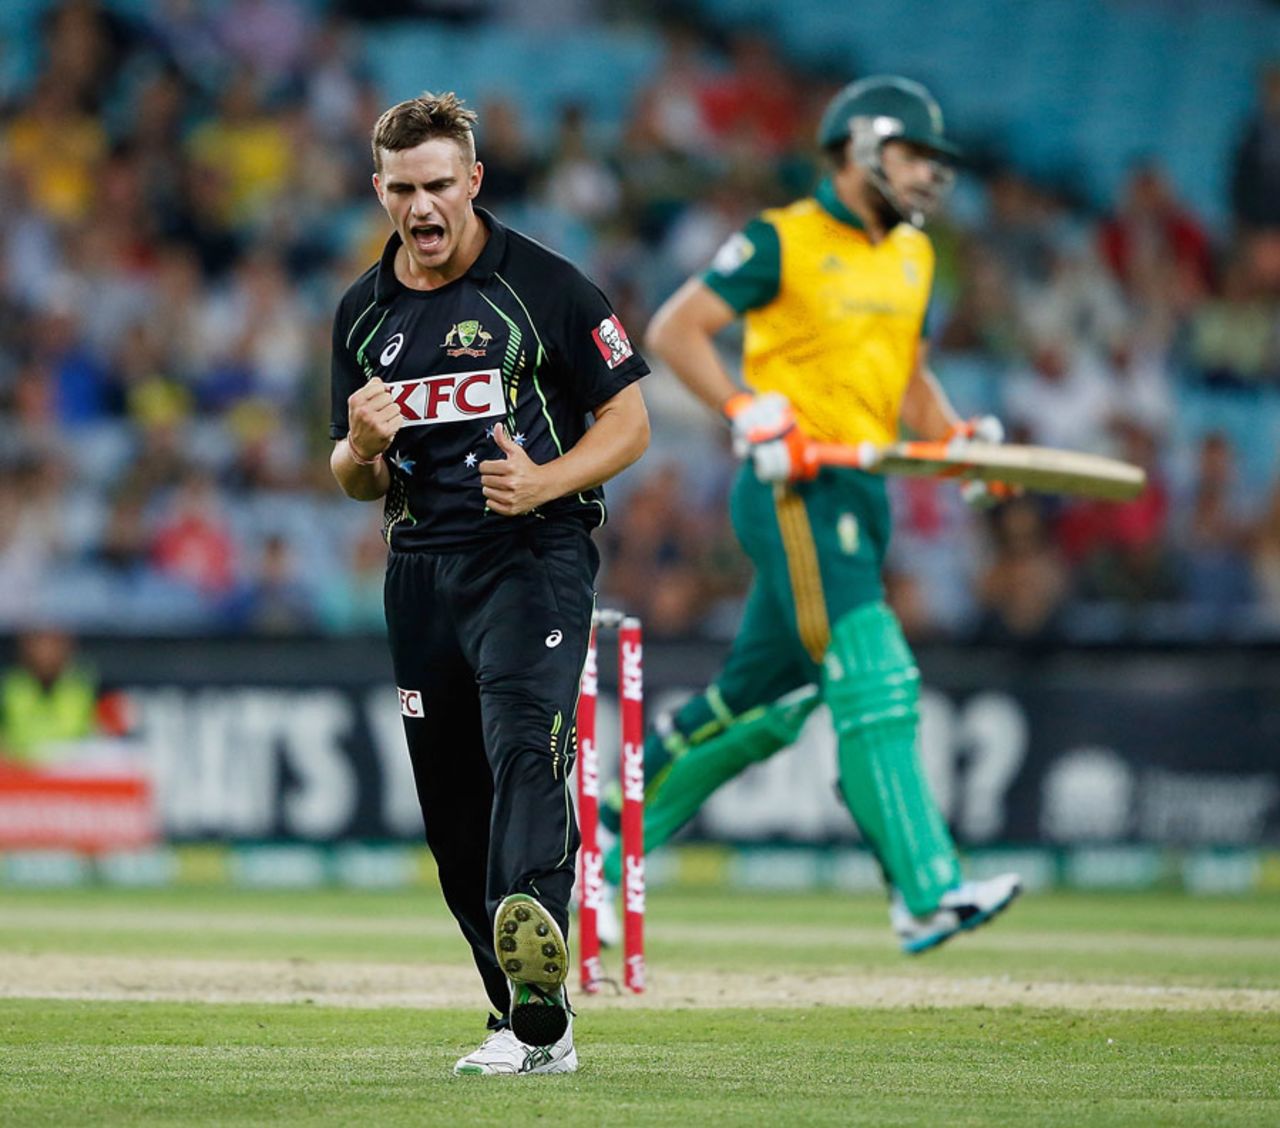 Cameron Boyce took the wicket of Rilee Rossouw, Australia v South Africa, 3rd Twenty20, Sydney, November 9, 2014